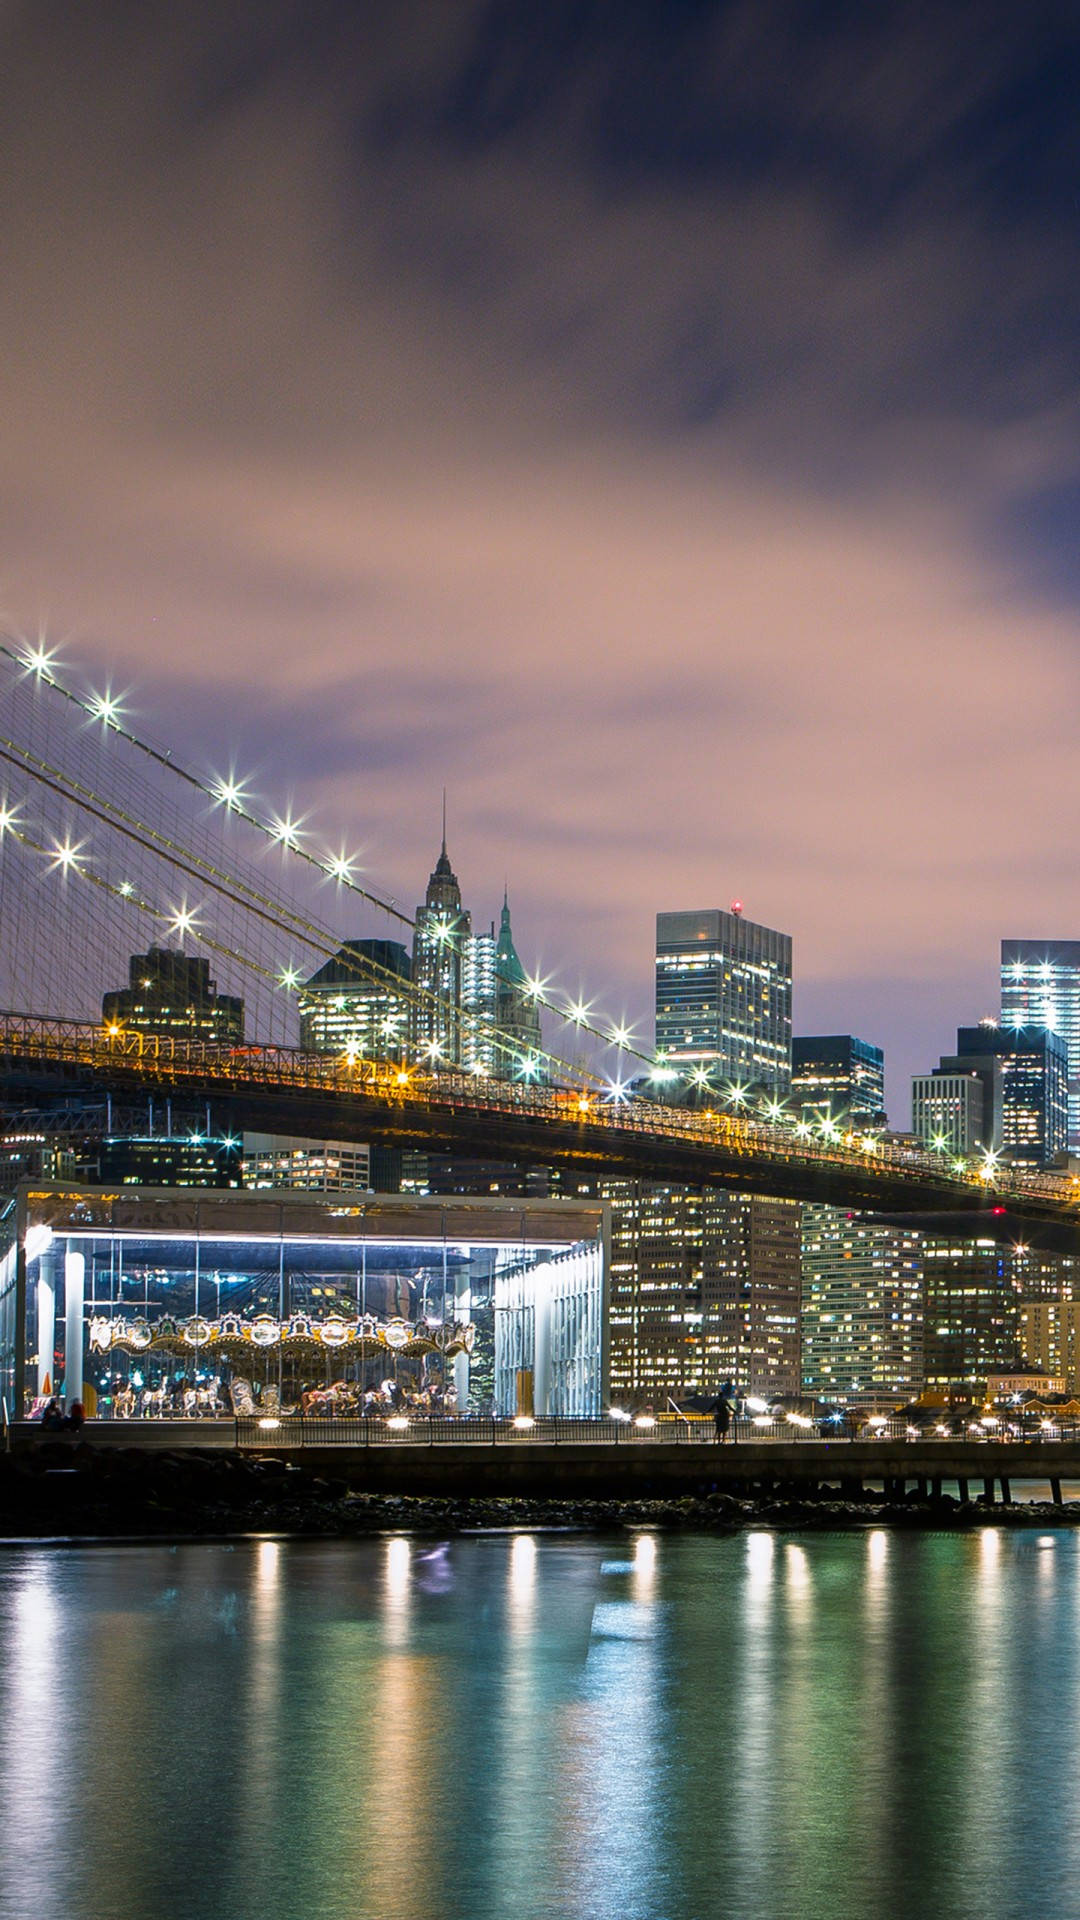 Neuyork City Iphone X Brooklyn Bridge. Wallpaper